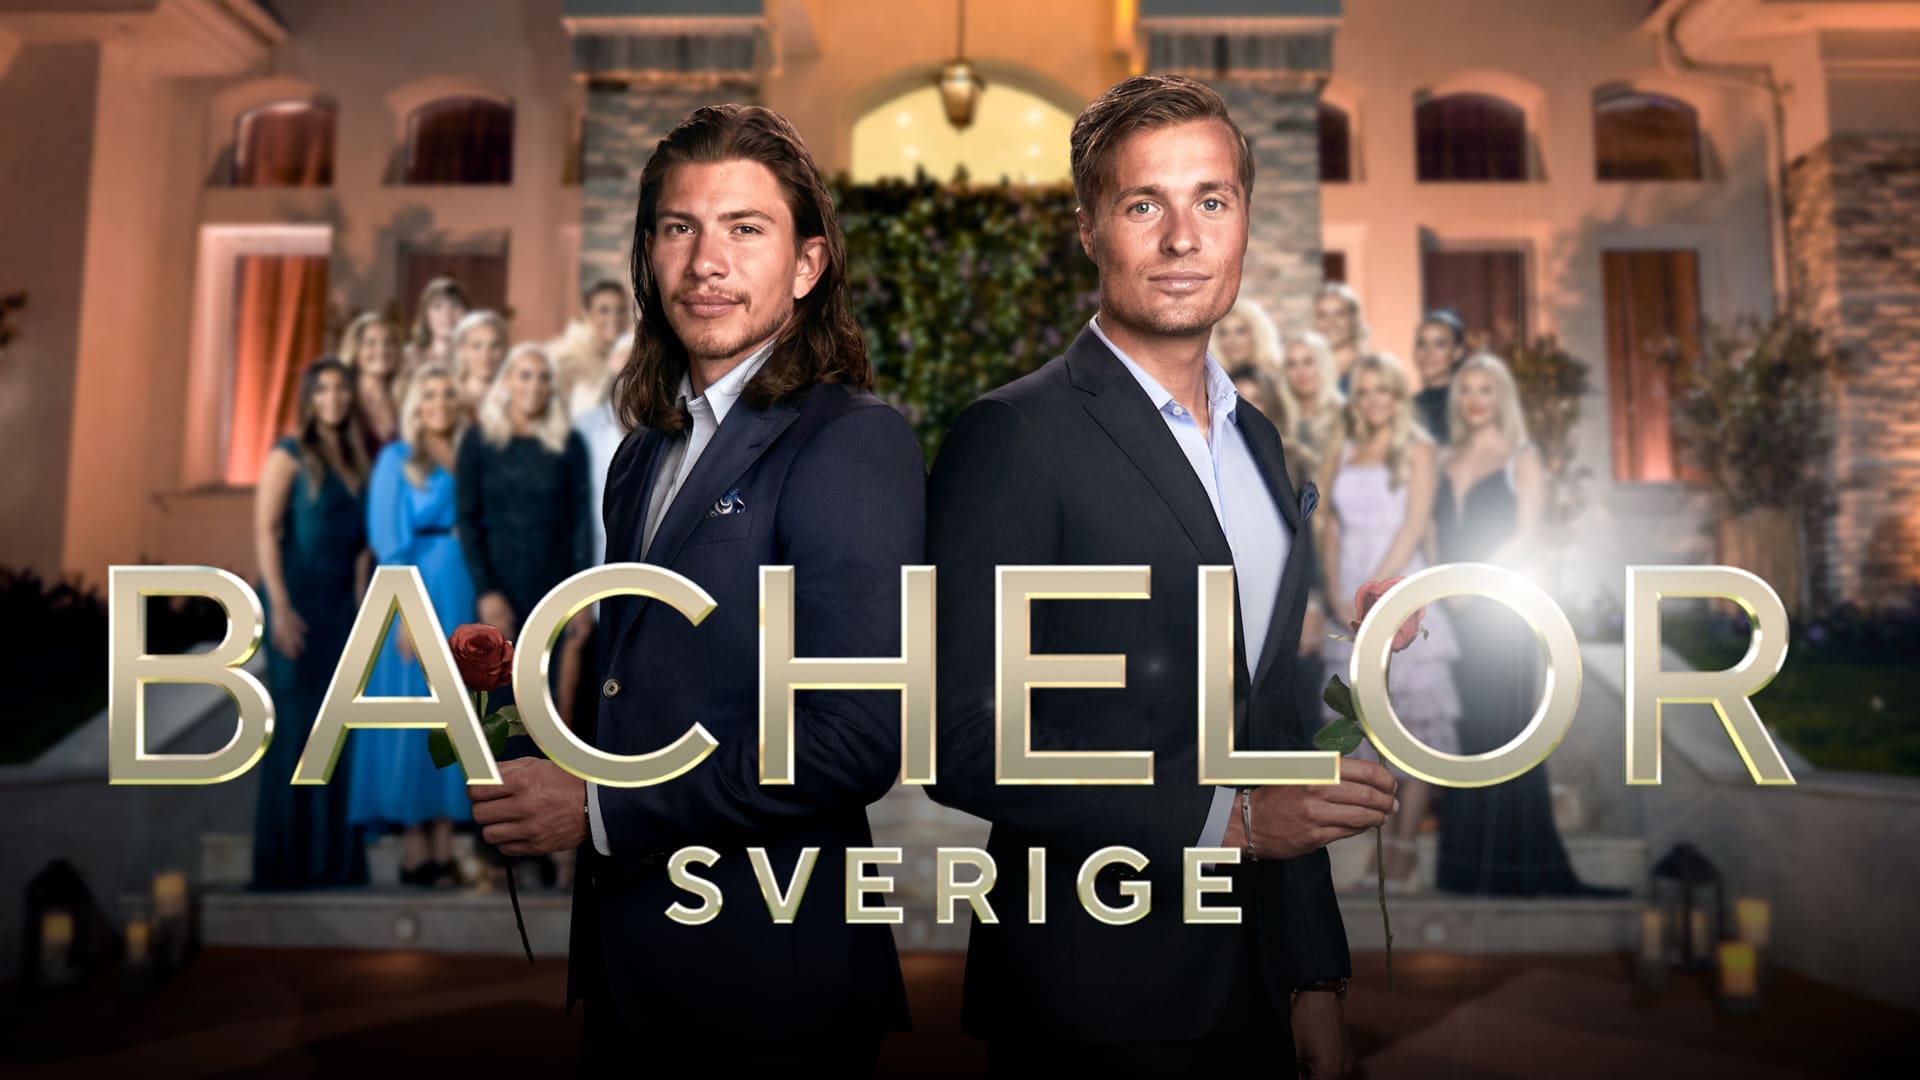 Bachelor Sverige Poster Twenty Studios